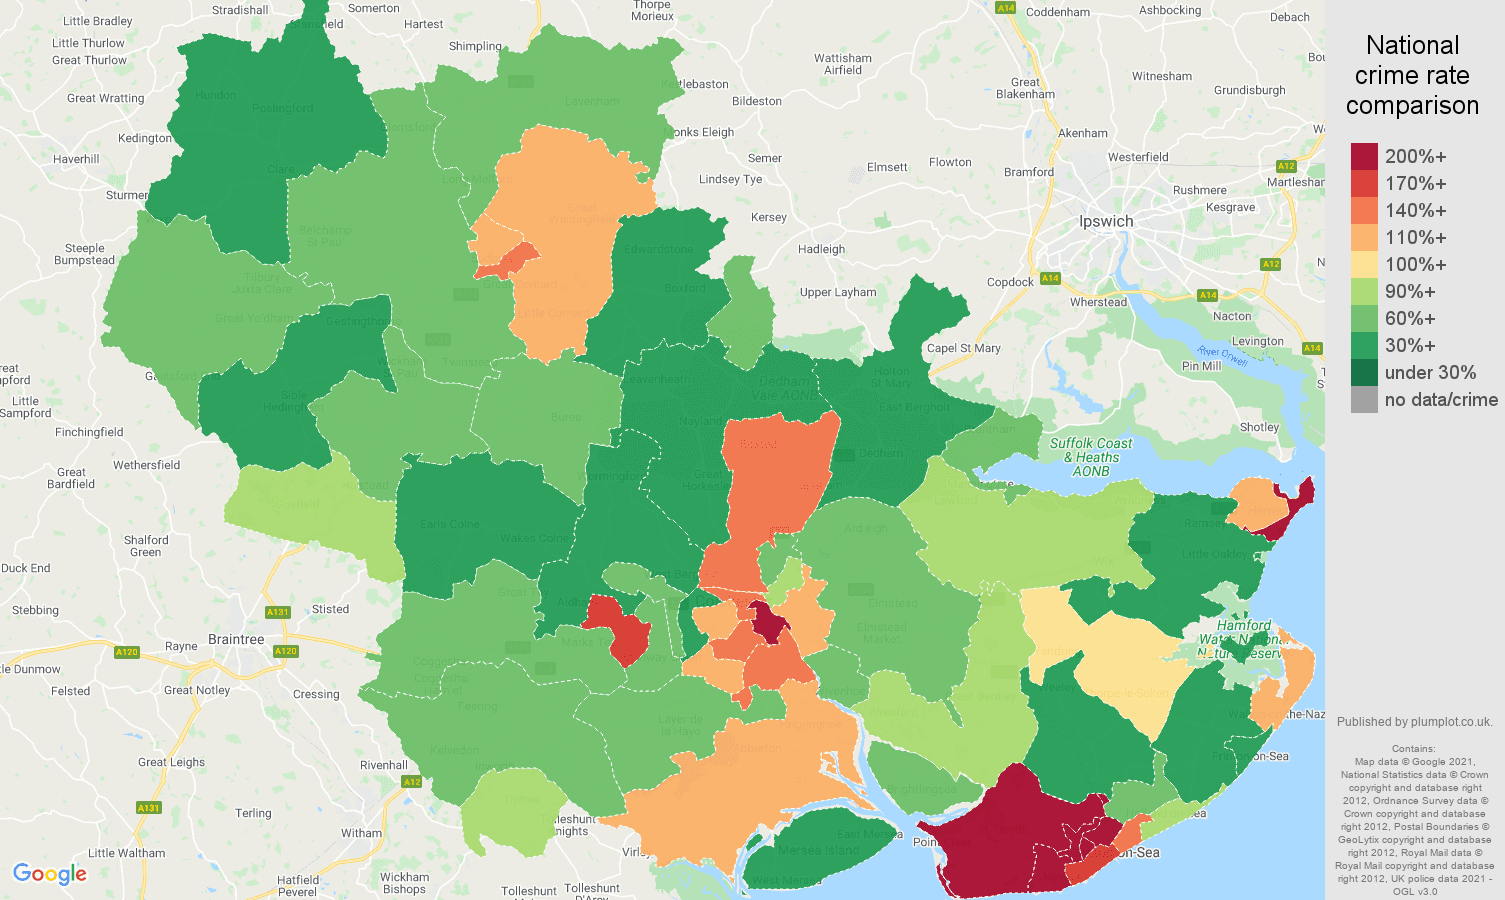 Colchester criminal damage and arson crime rate comparison map